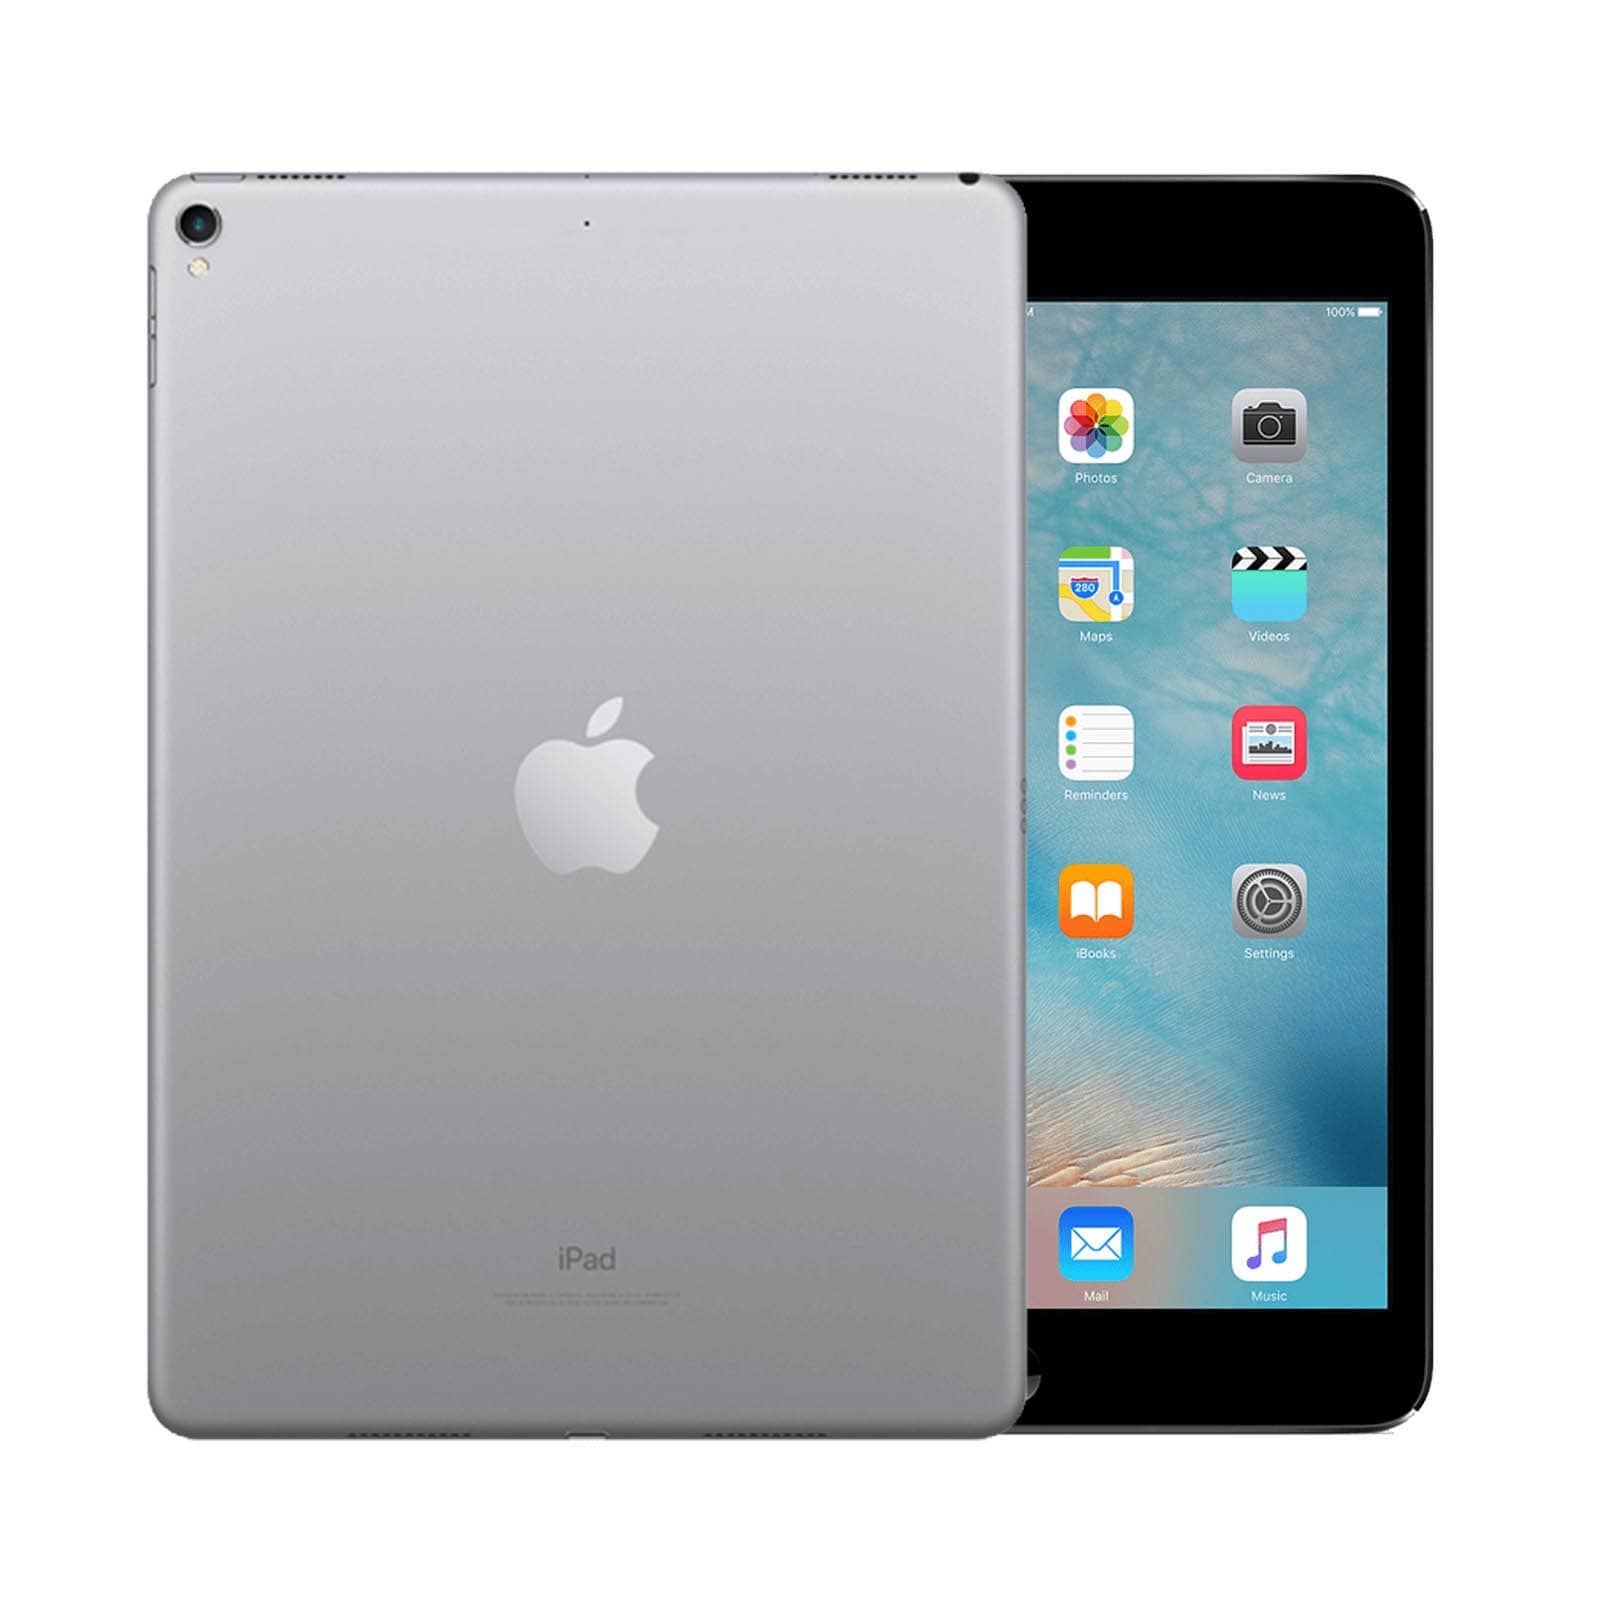 iPad Pro 9.7 Inch 128GB Space Grey Good - WiFi 128GB Space Grey Good